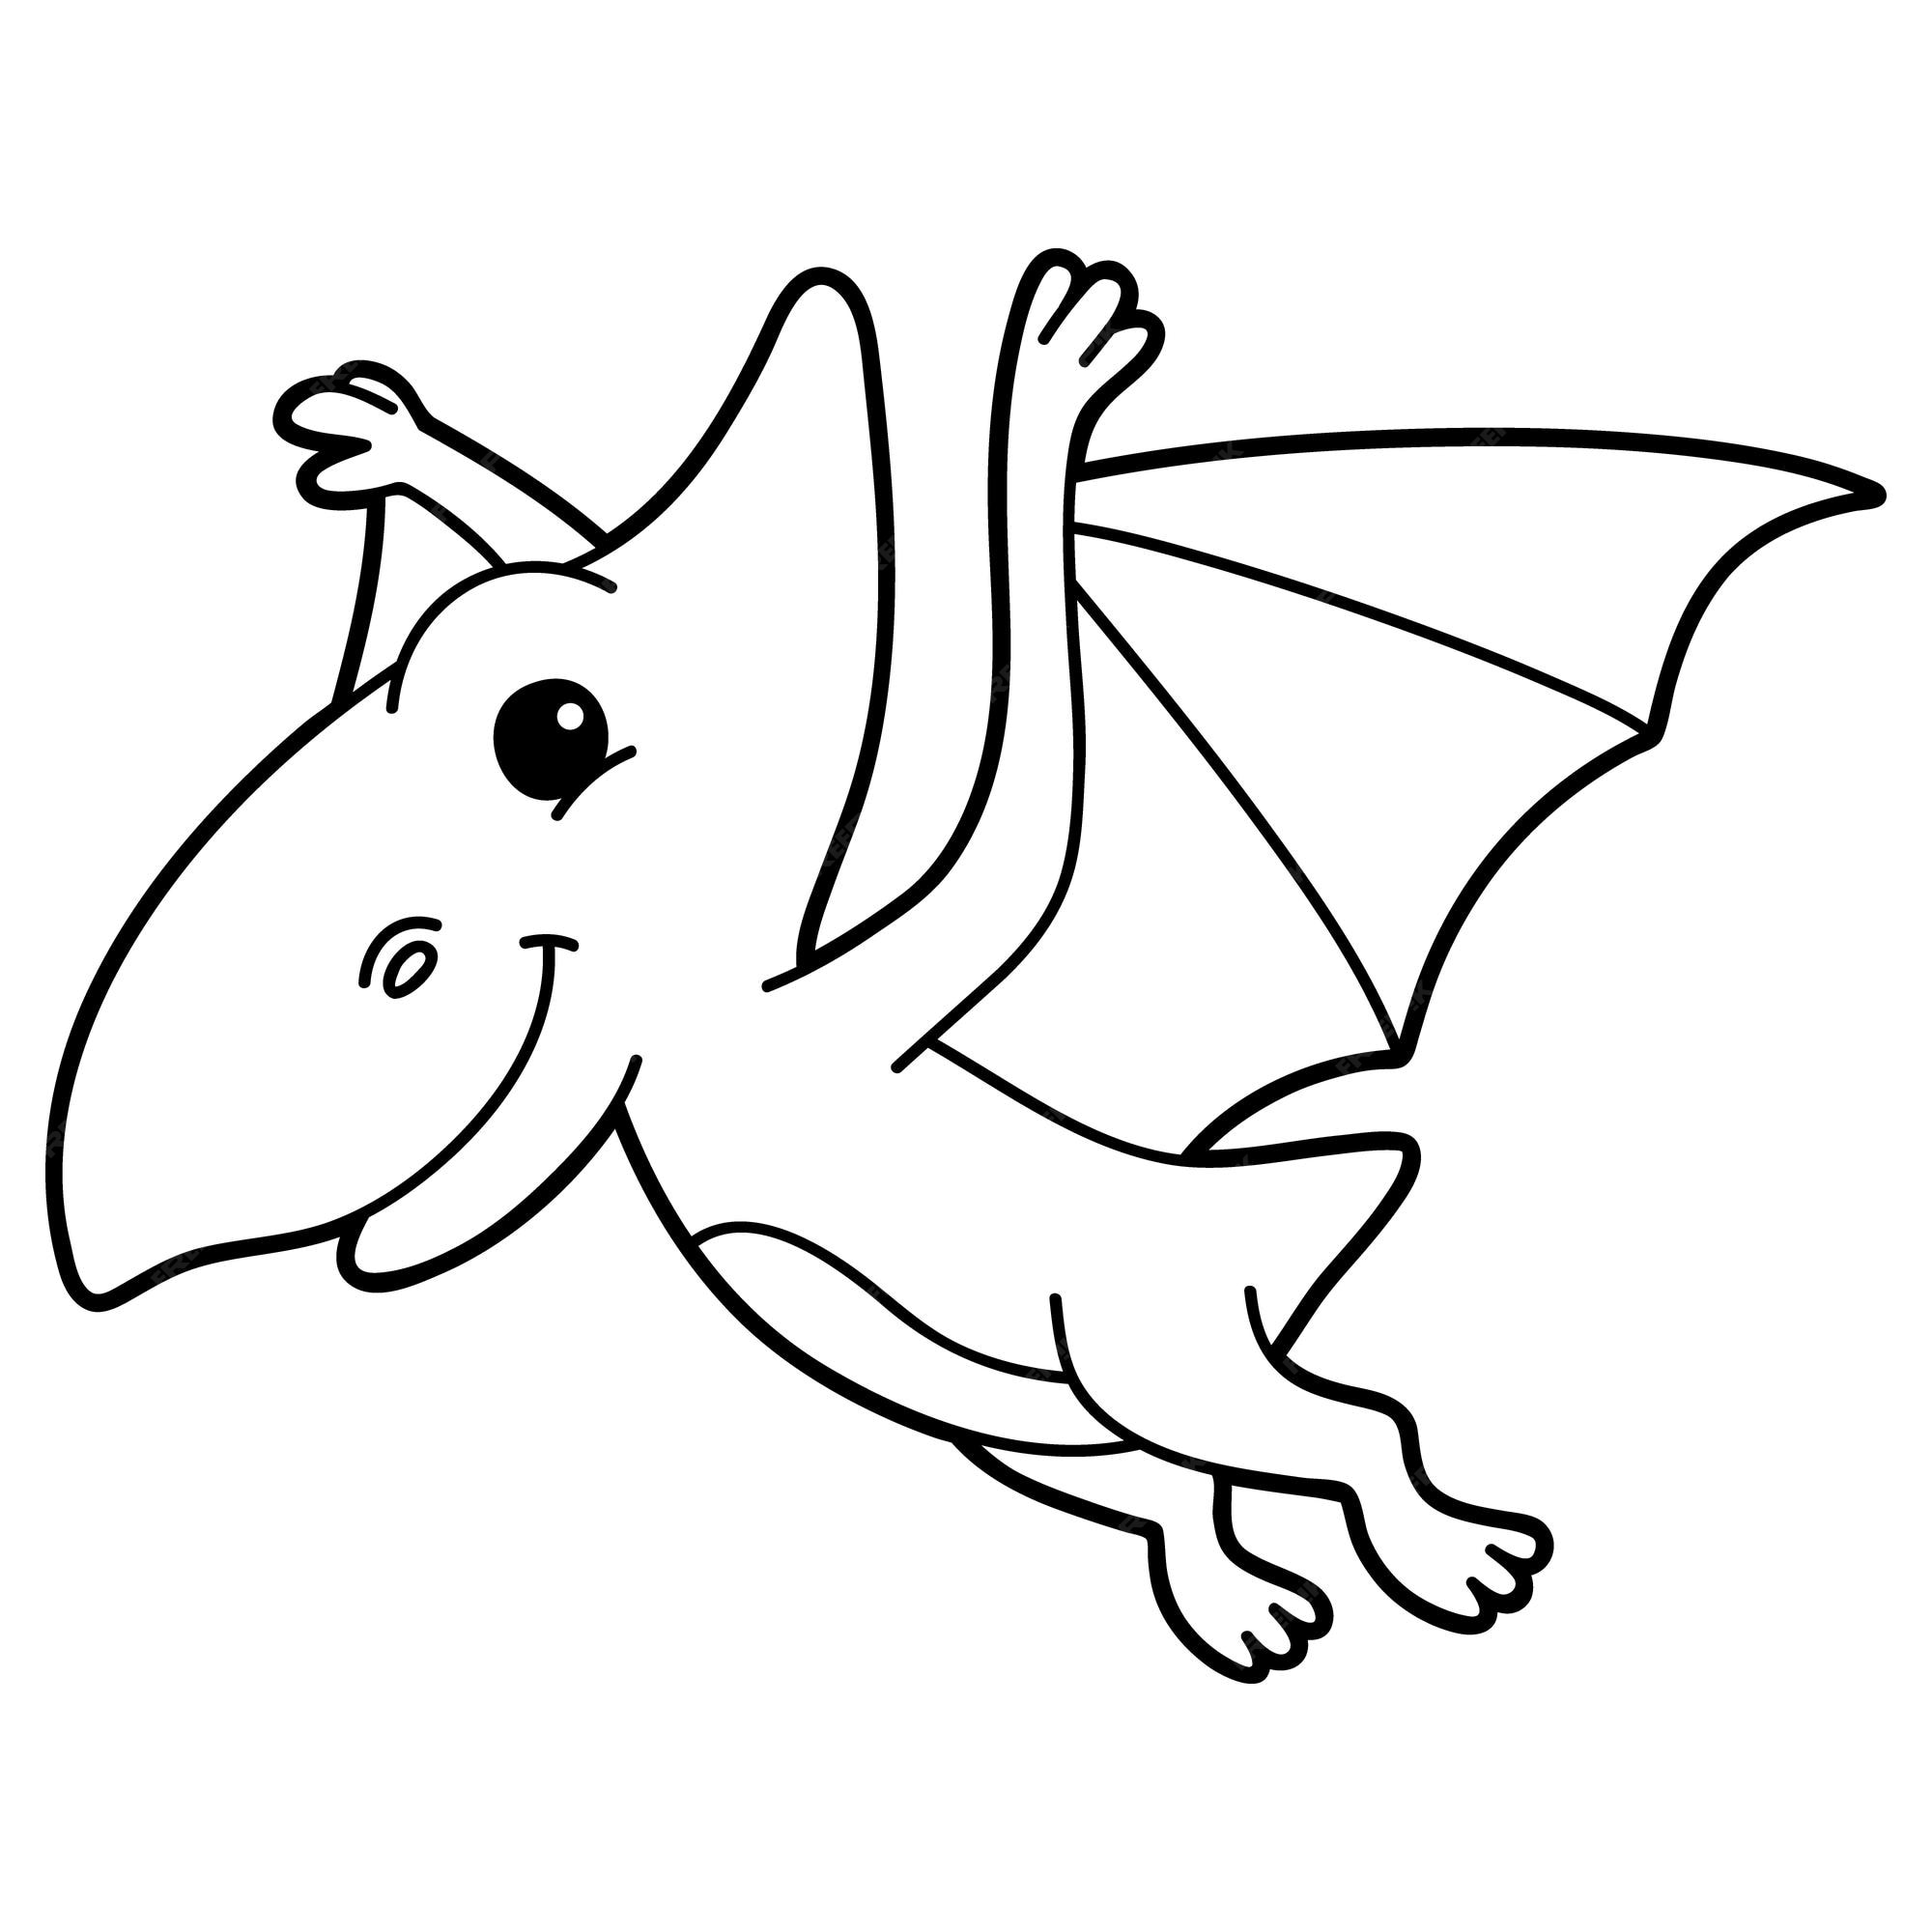 Premium vector illustration coloring page with cartoon dinosaur pteranodon